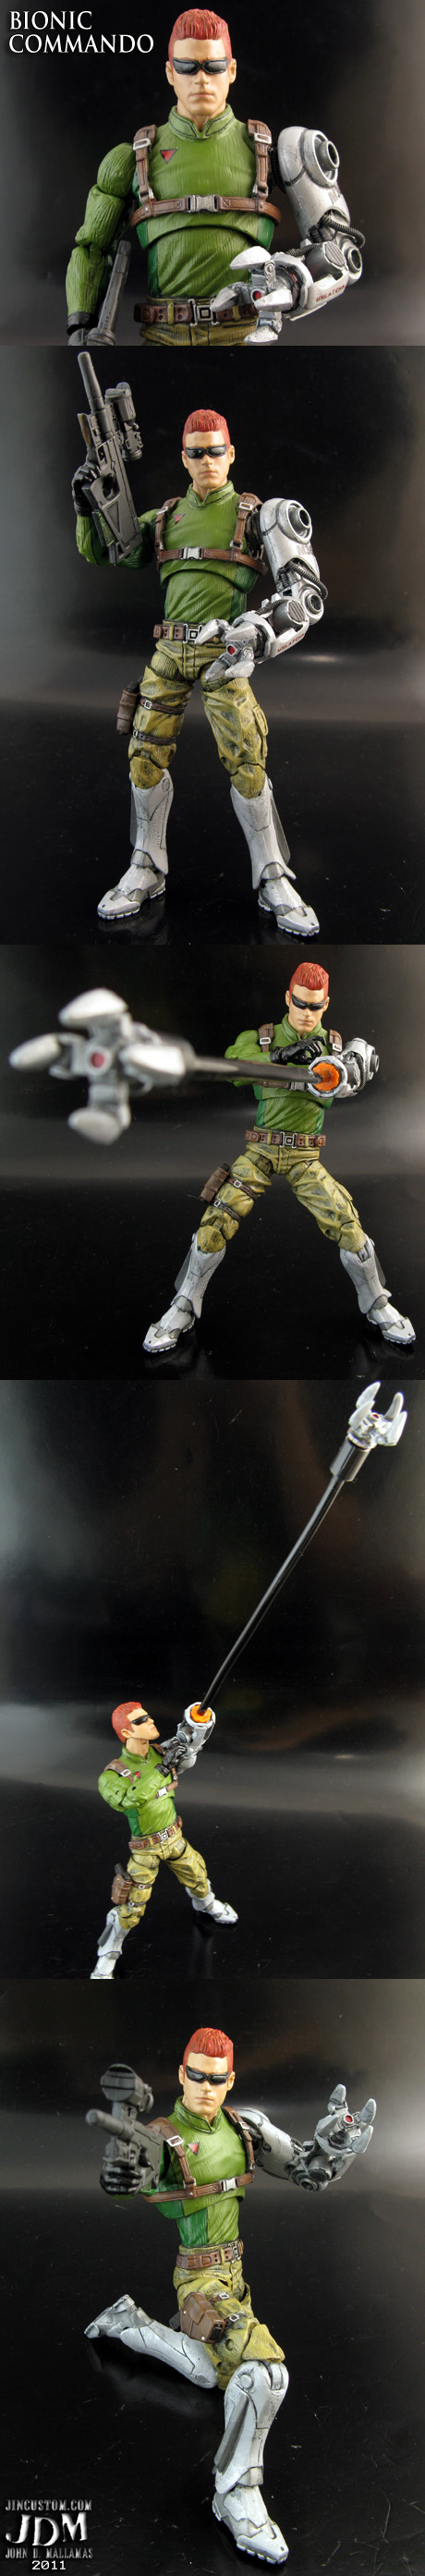 Bionic Commando Figure